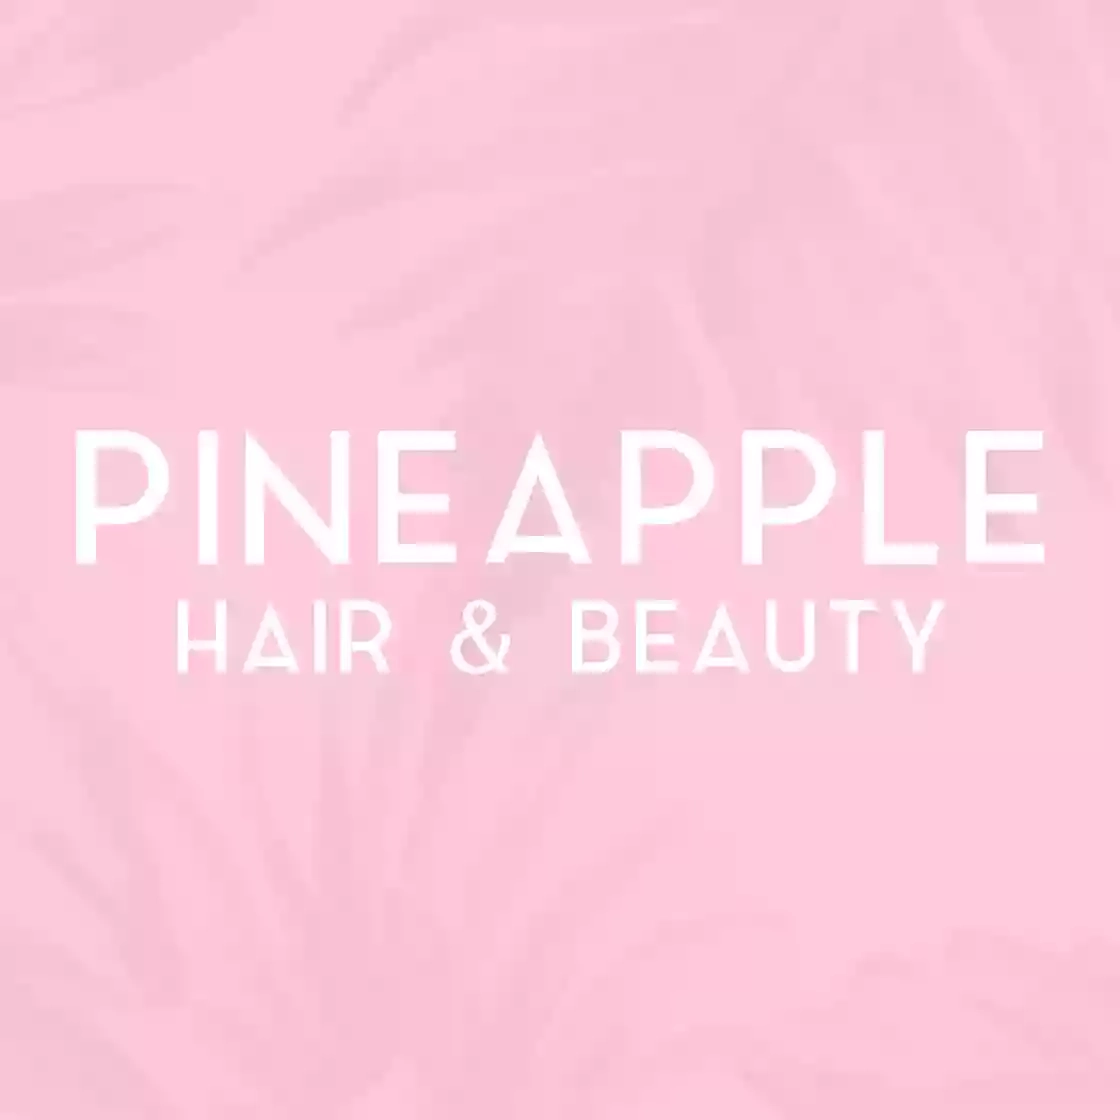 Pineapple Hair & Beauty